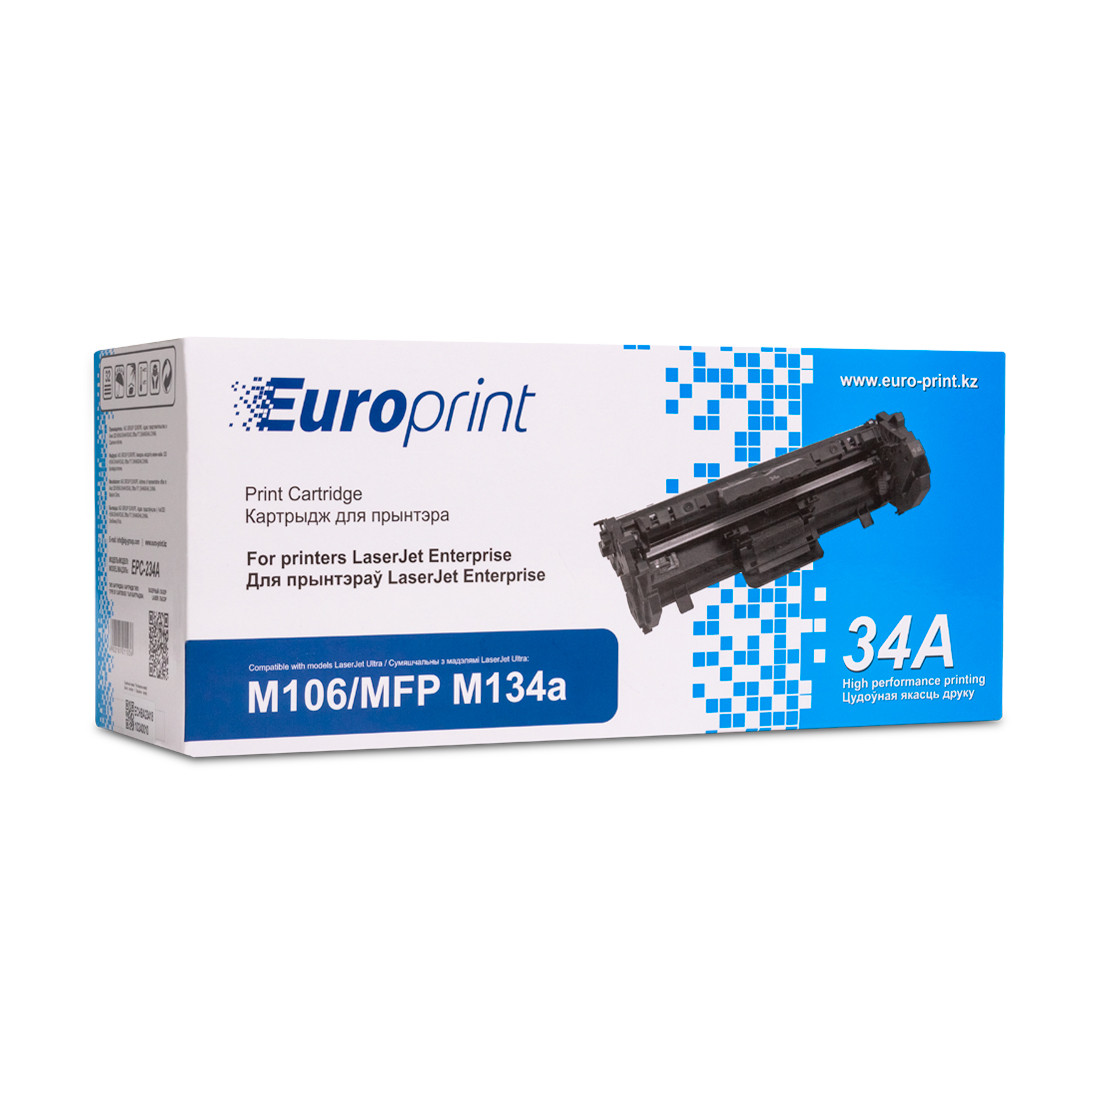 Картридж, Europrint, EPC-234A, Для принтеров HP LaserJet Ultra M106/MFP M134a, 9200 страниц.